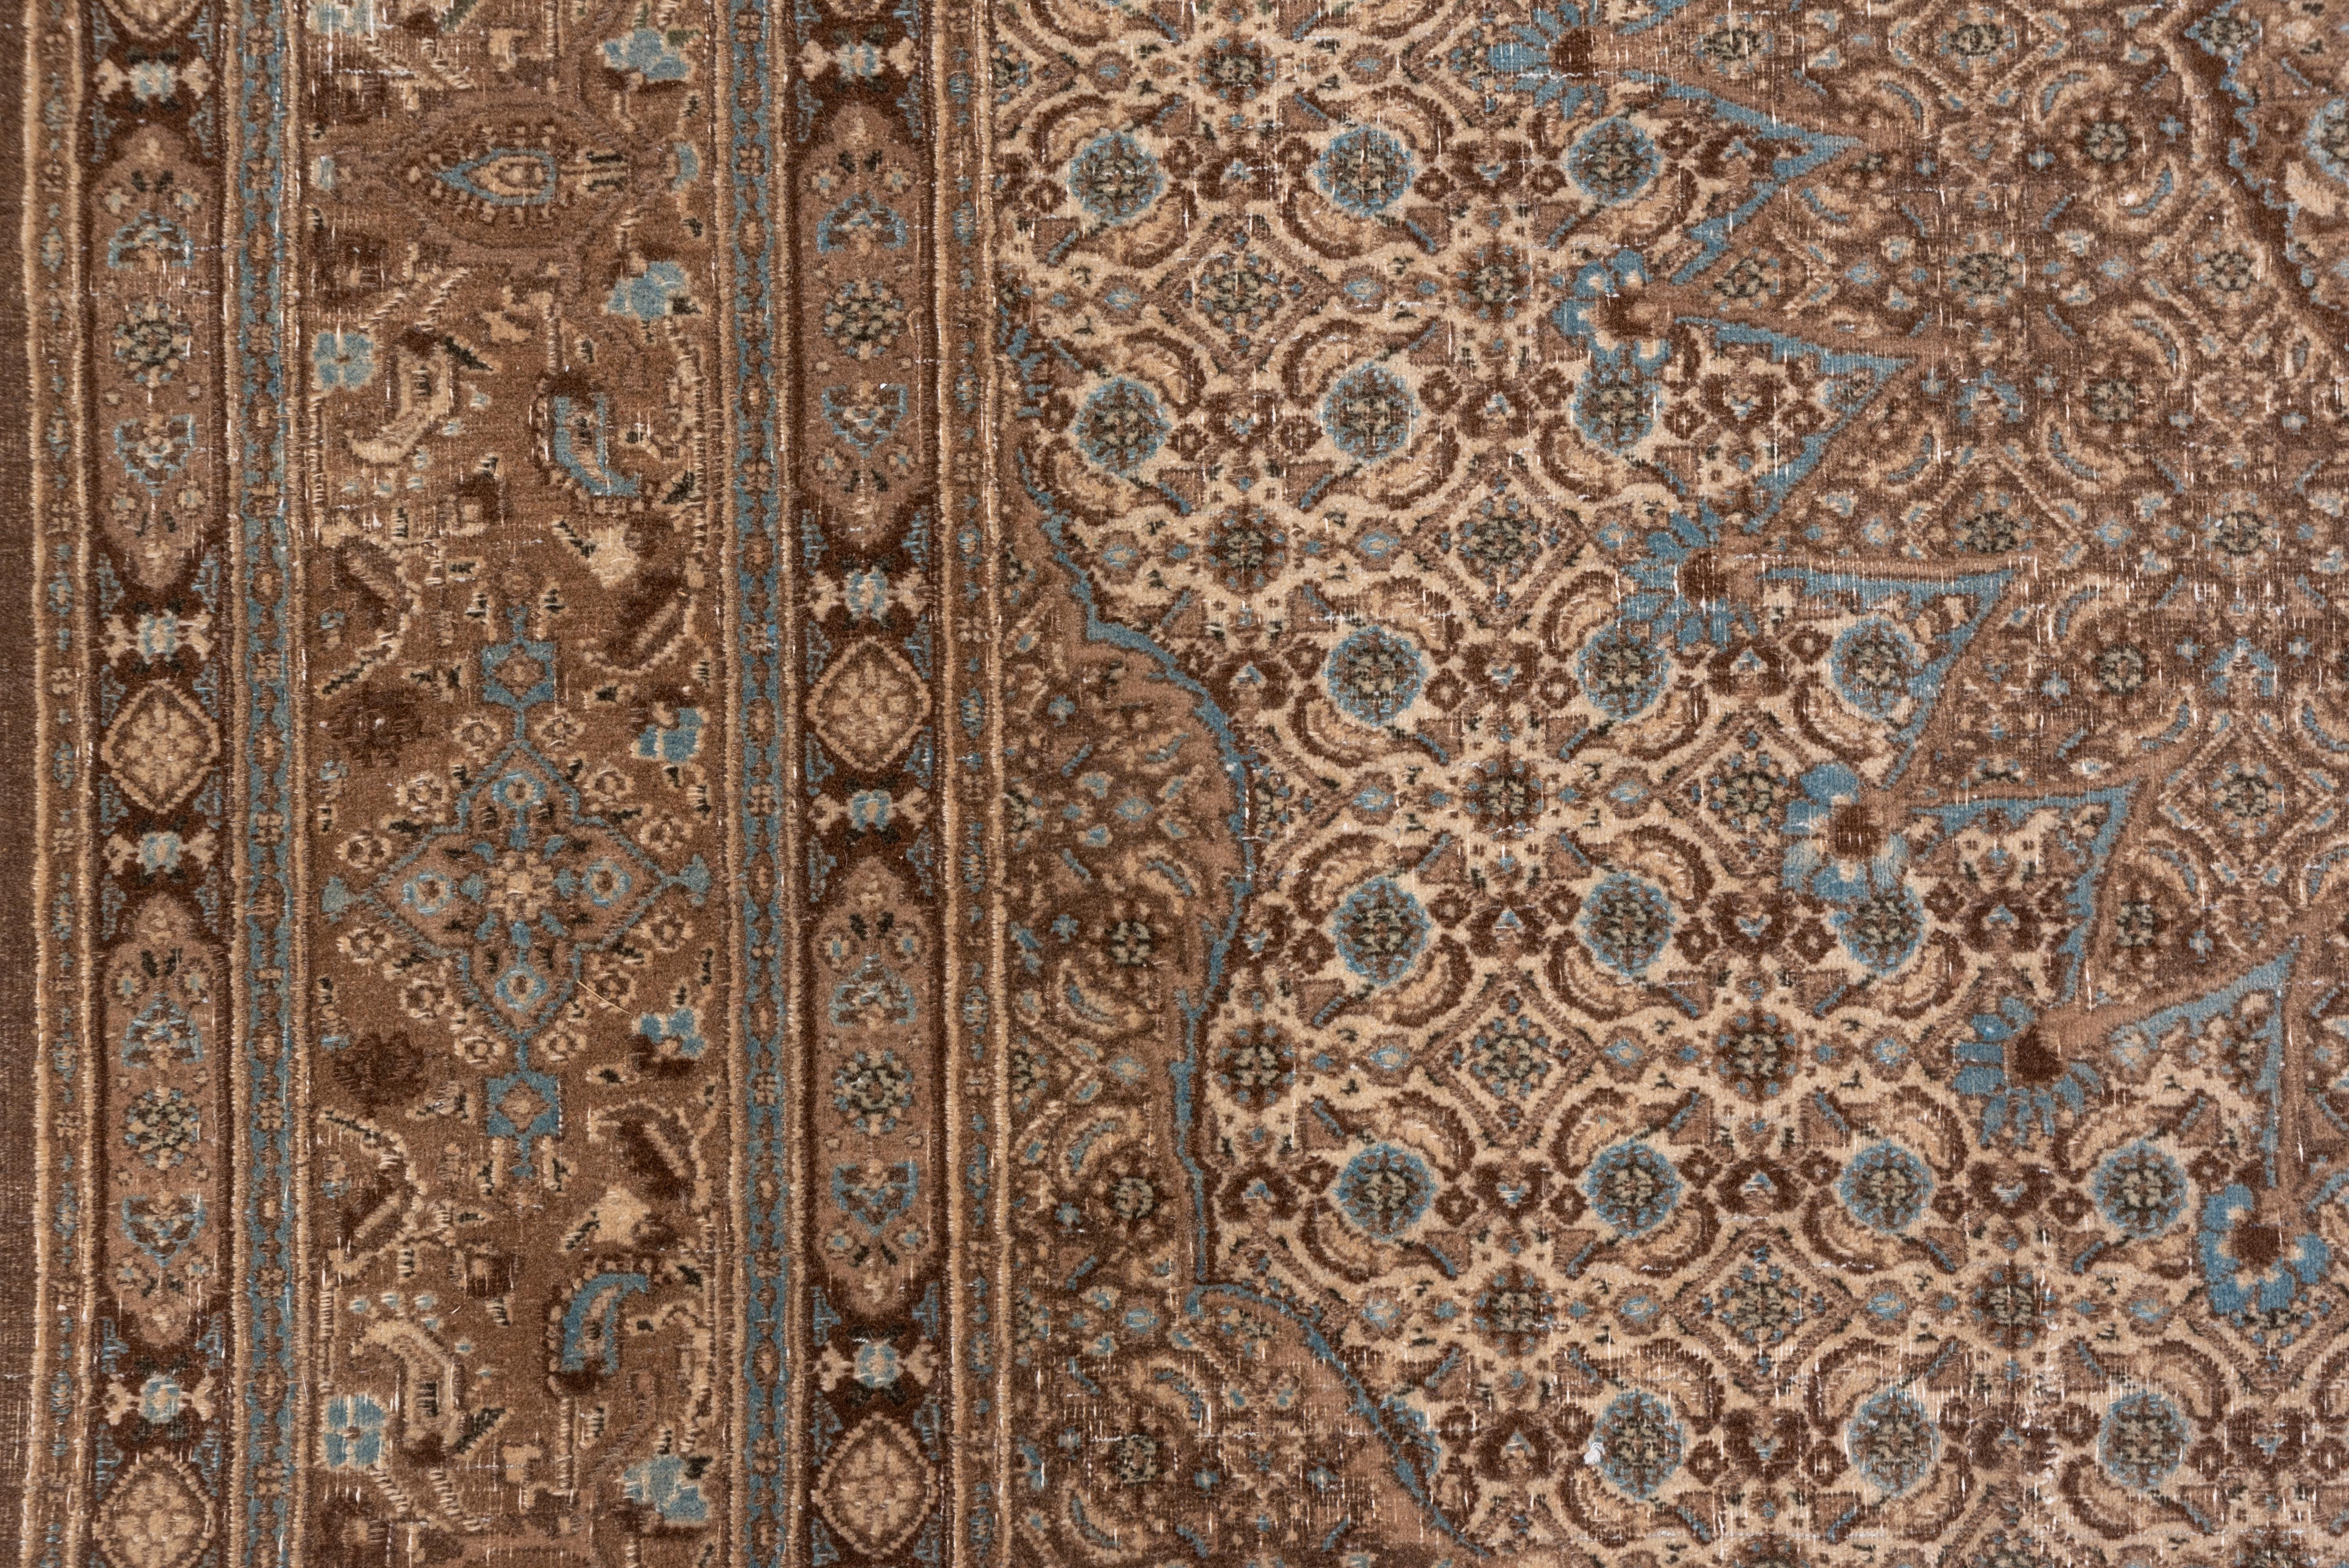 Wool Antique Turkish Sivas Carpet, Center Medallion, Brown and Light Blue Palette For Sale